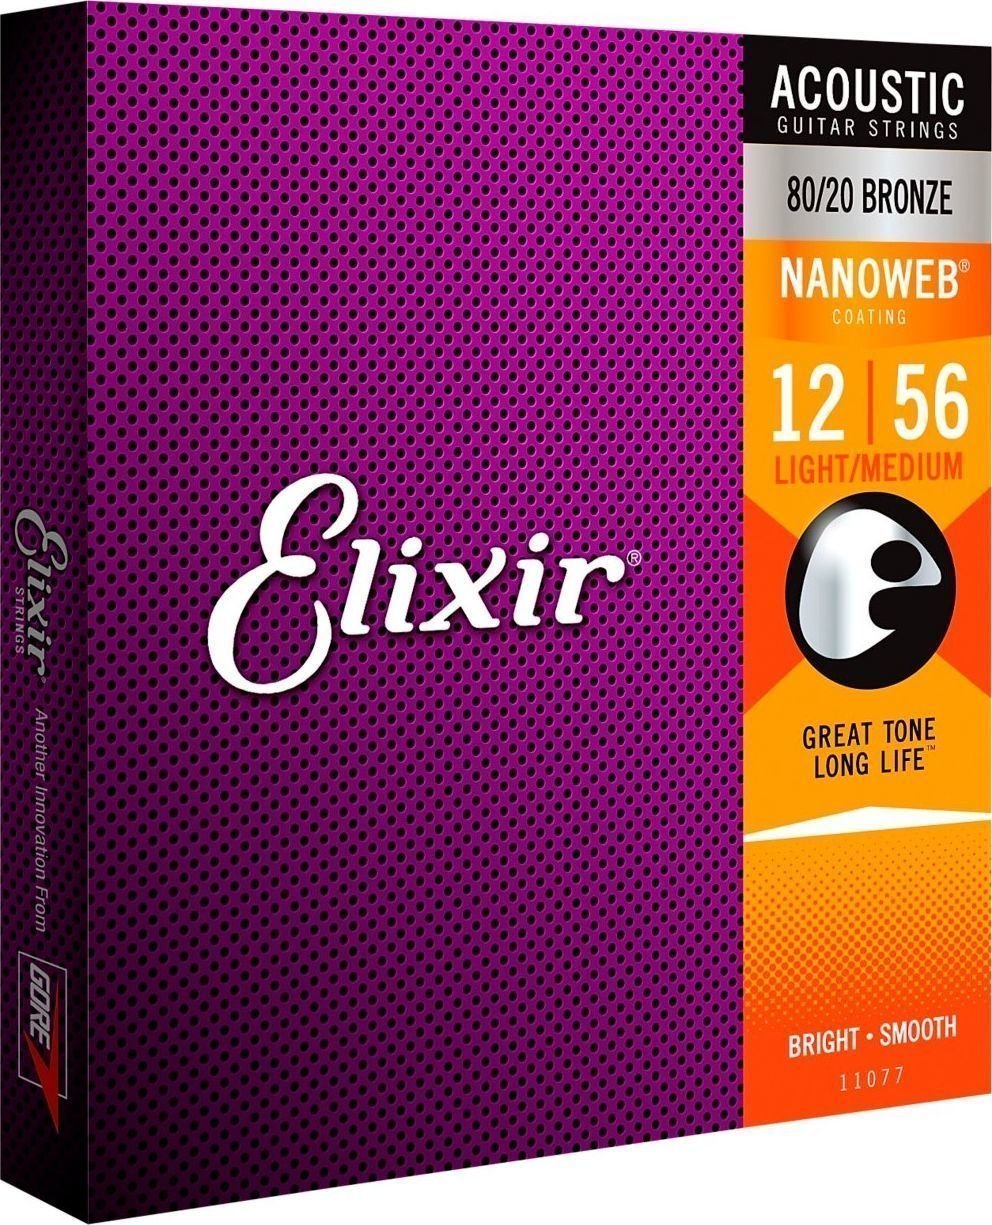 Guitar strings Elixir 11077 Nanoweb 12-56